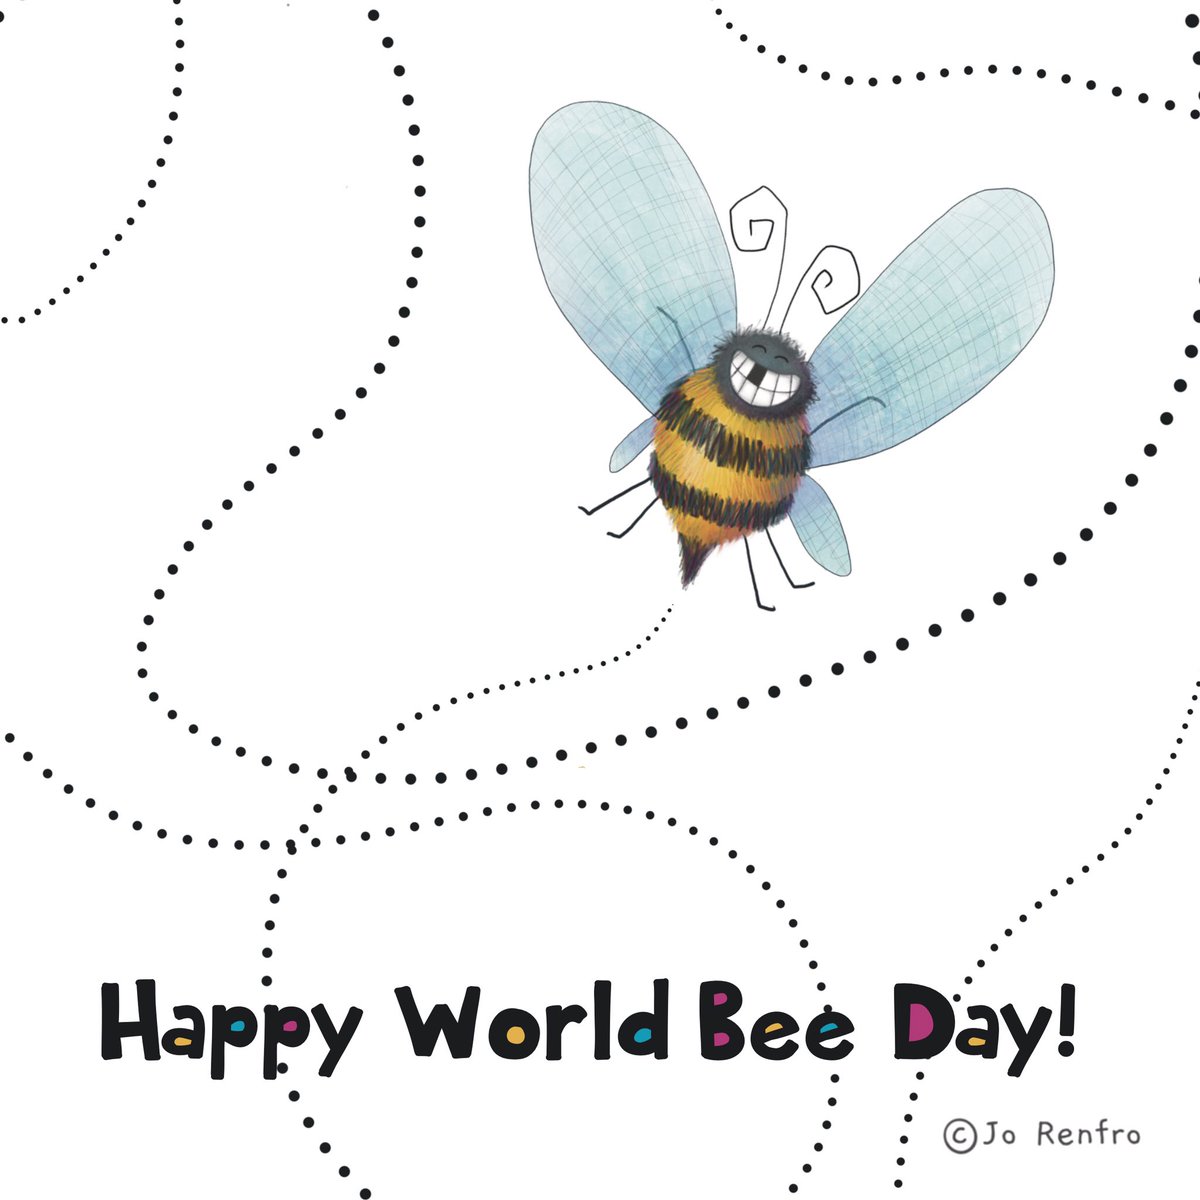 Happy World Bee Day! #worldbeeday